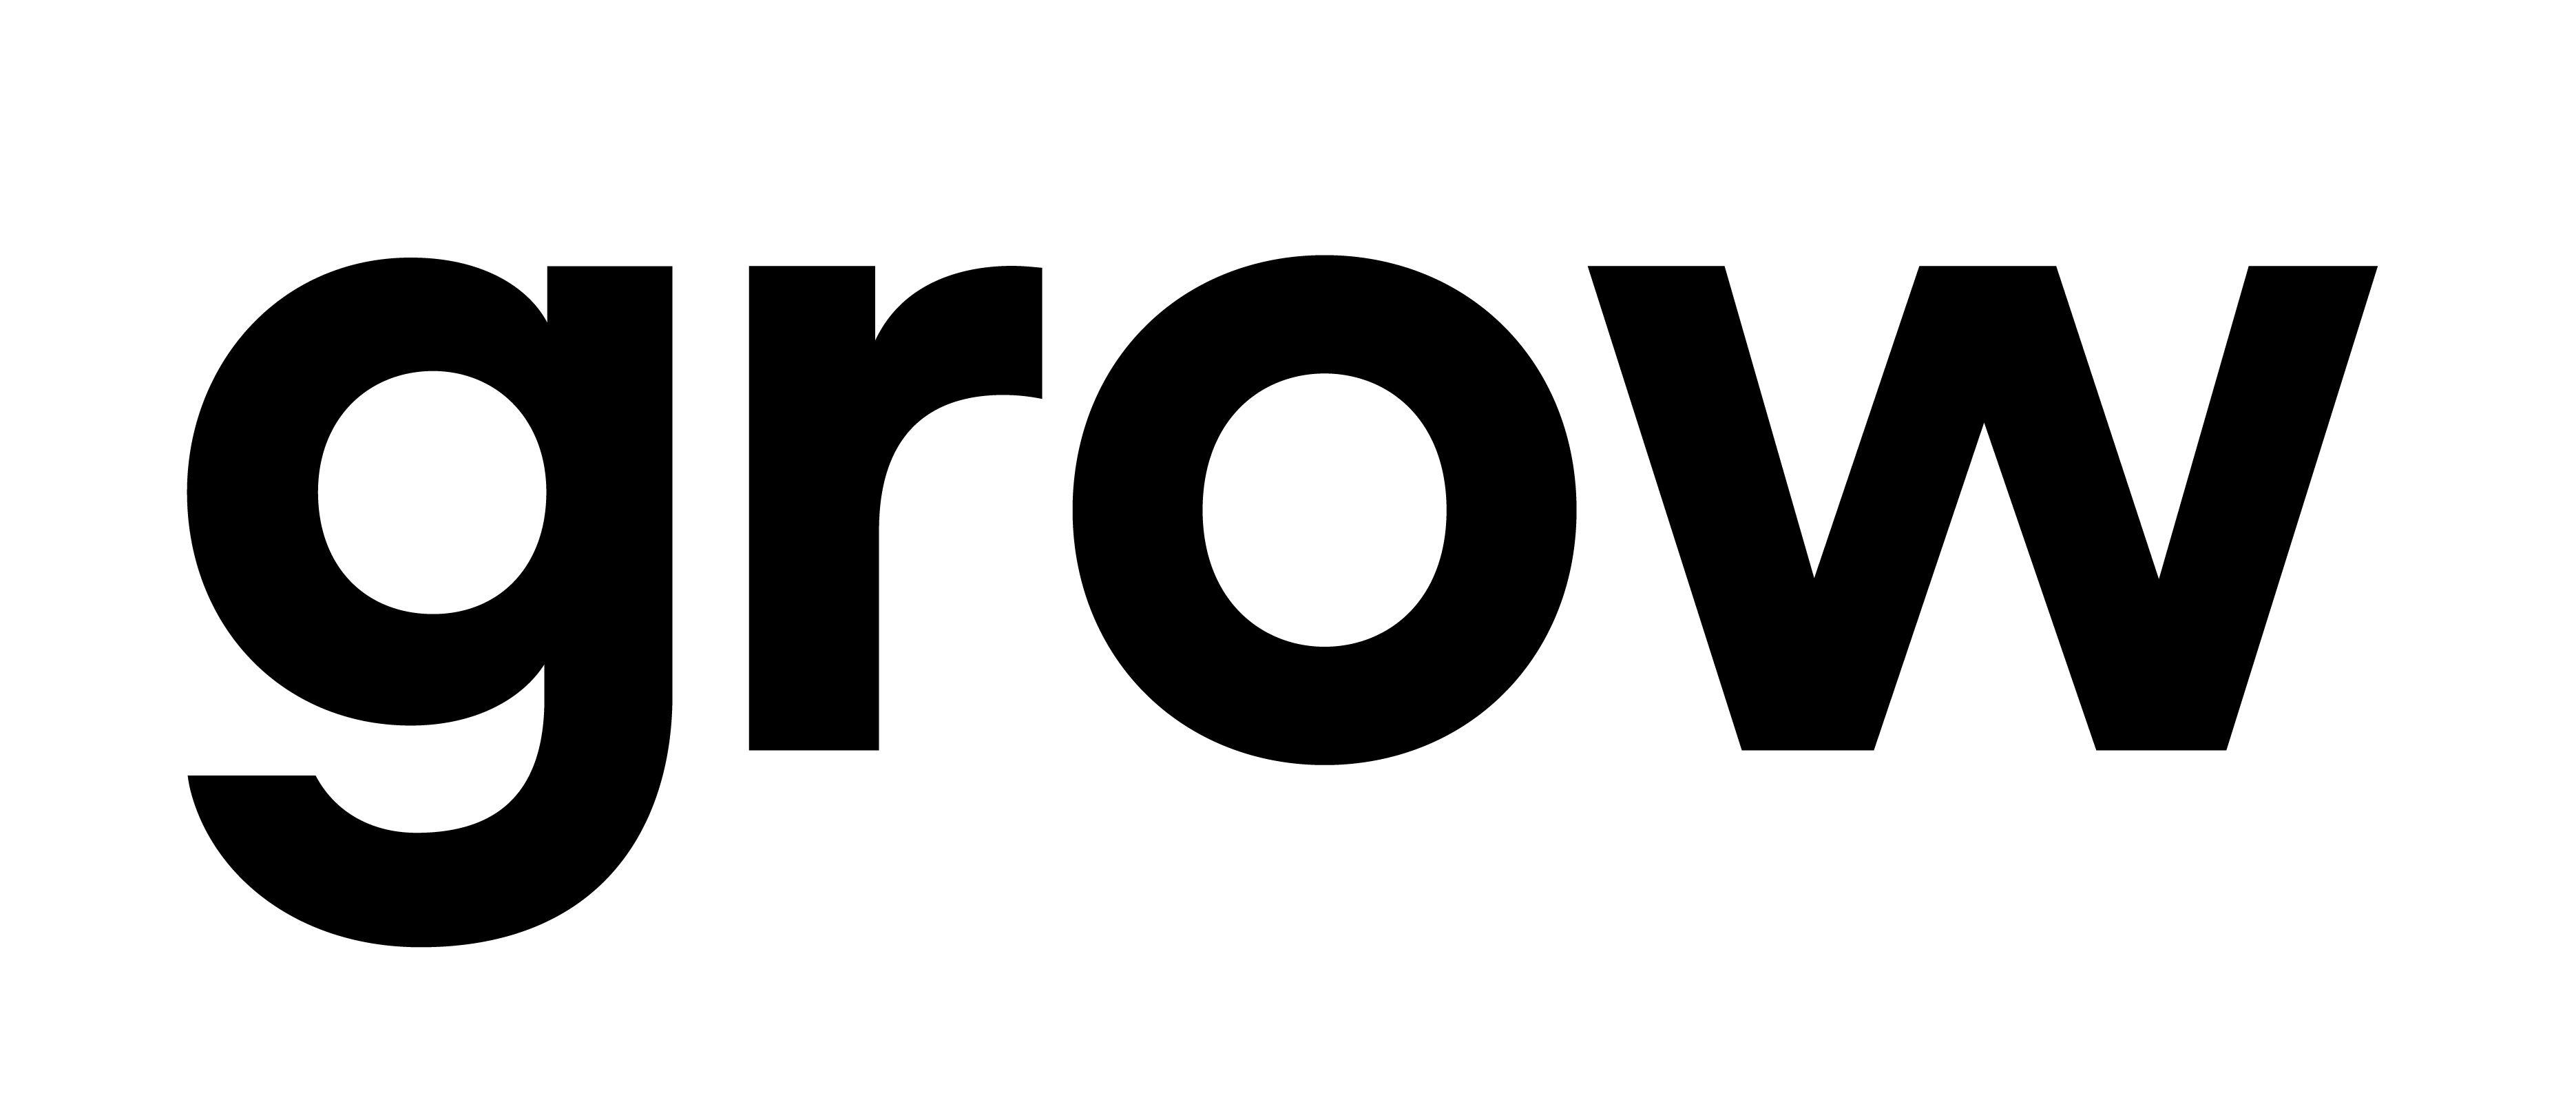 Grow Logo - Grow. Award Winning Branding Agency In Doha Qatar